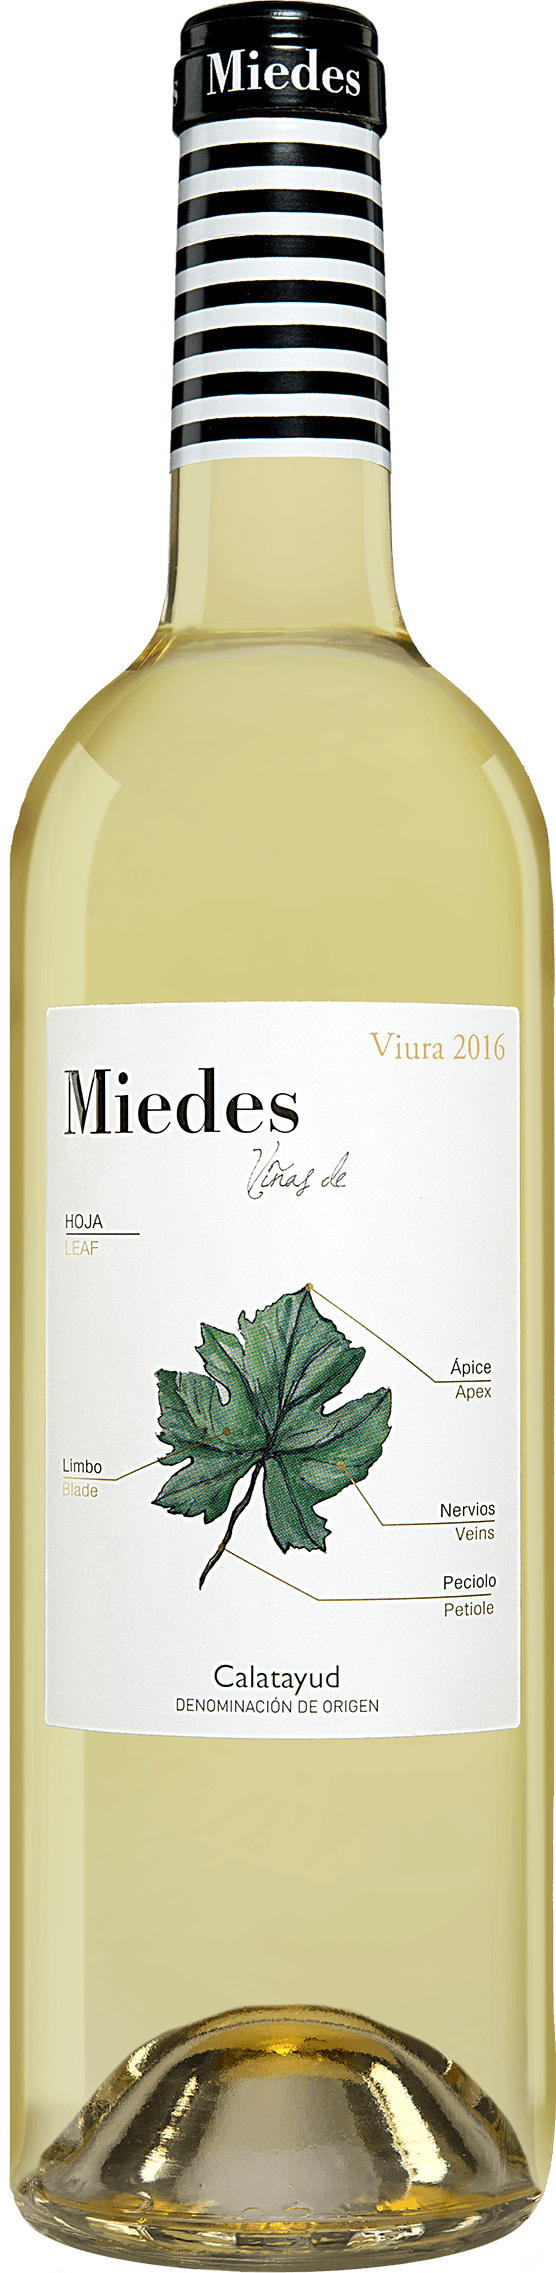 San Alejandro, Vinas De Miedes Viura, 2016